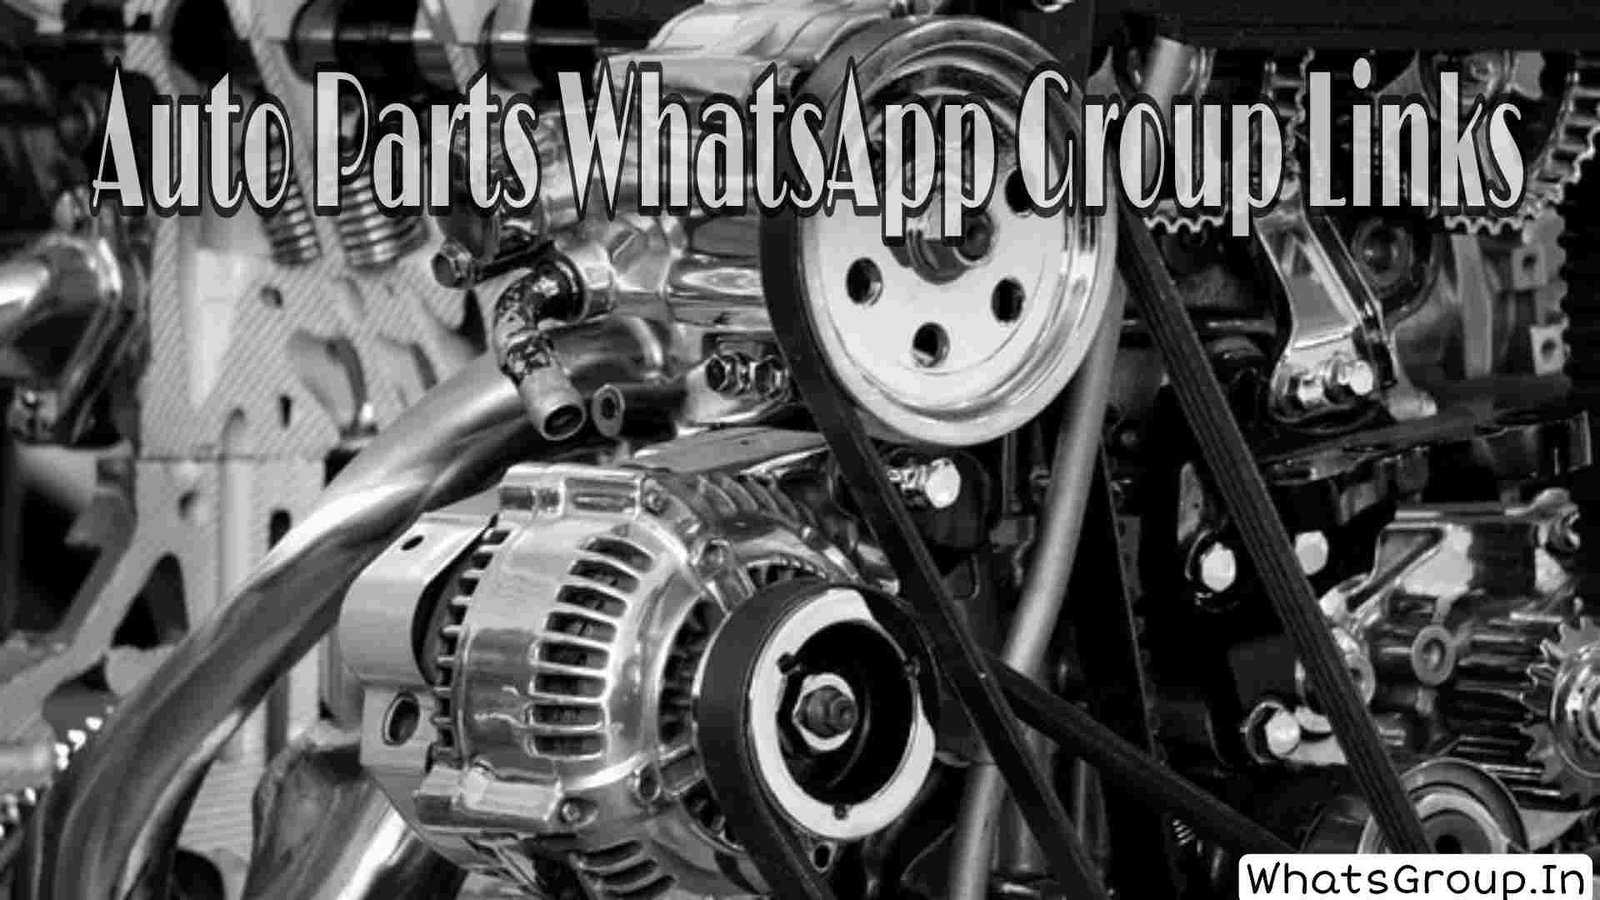 Auto Parts WhatsApp Group Links